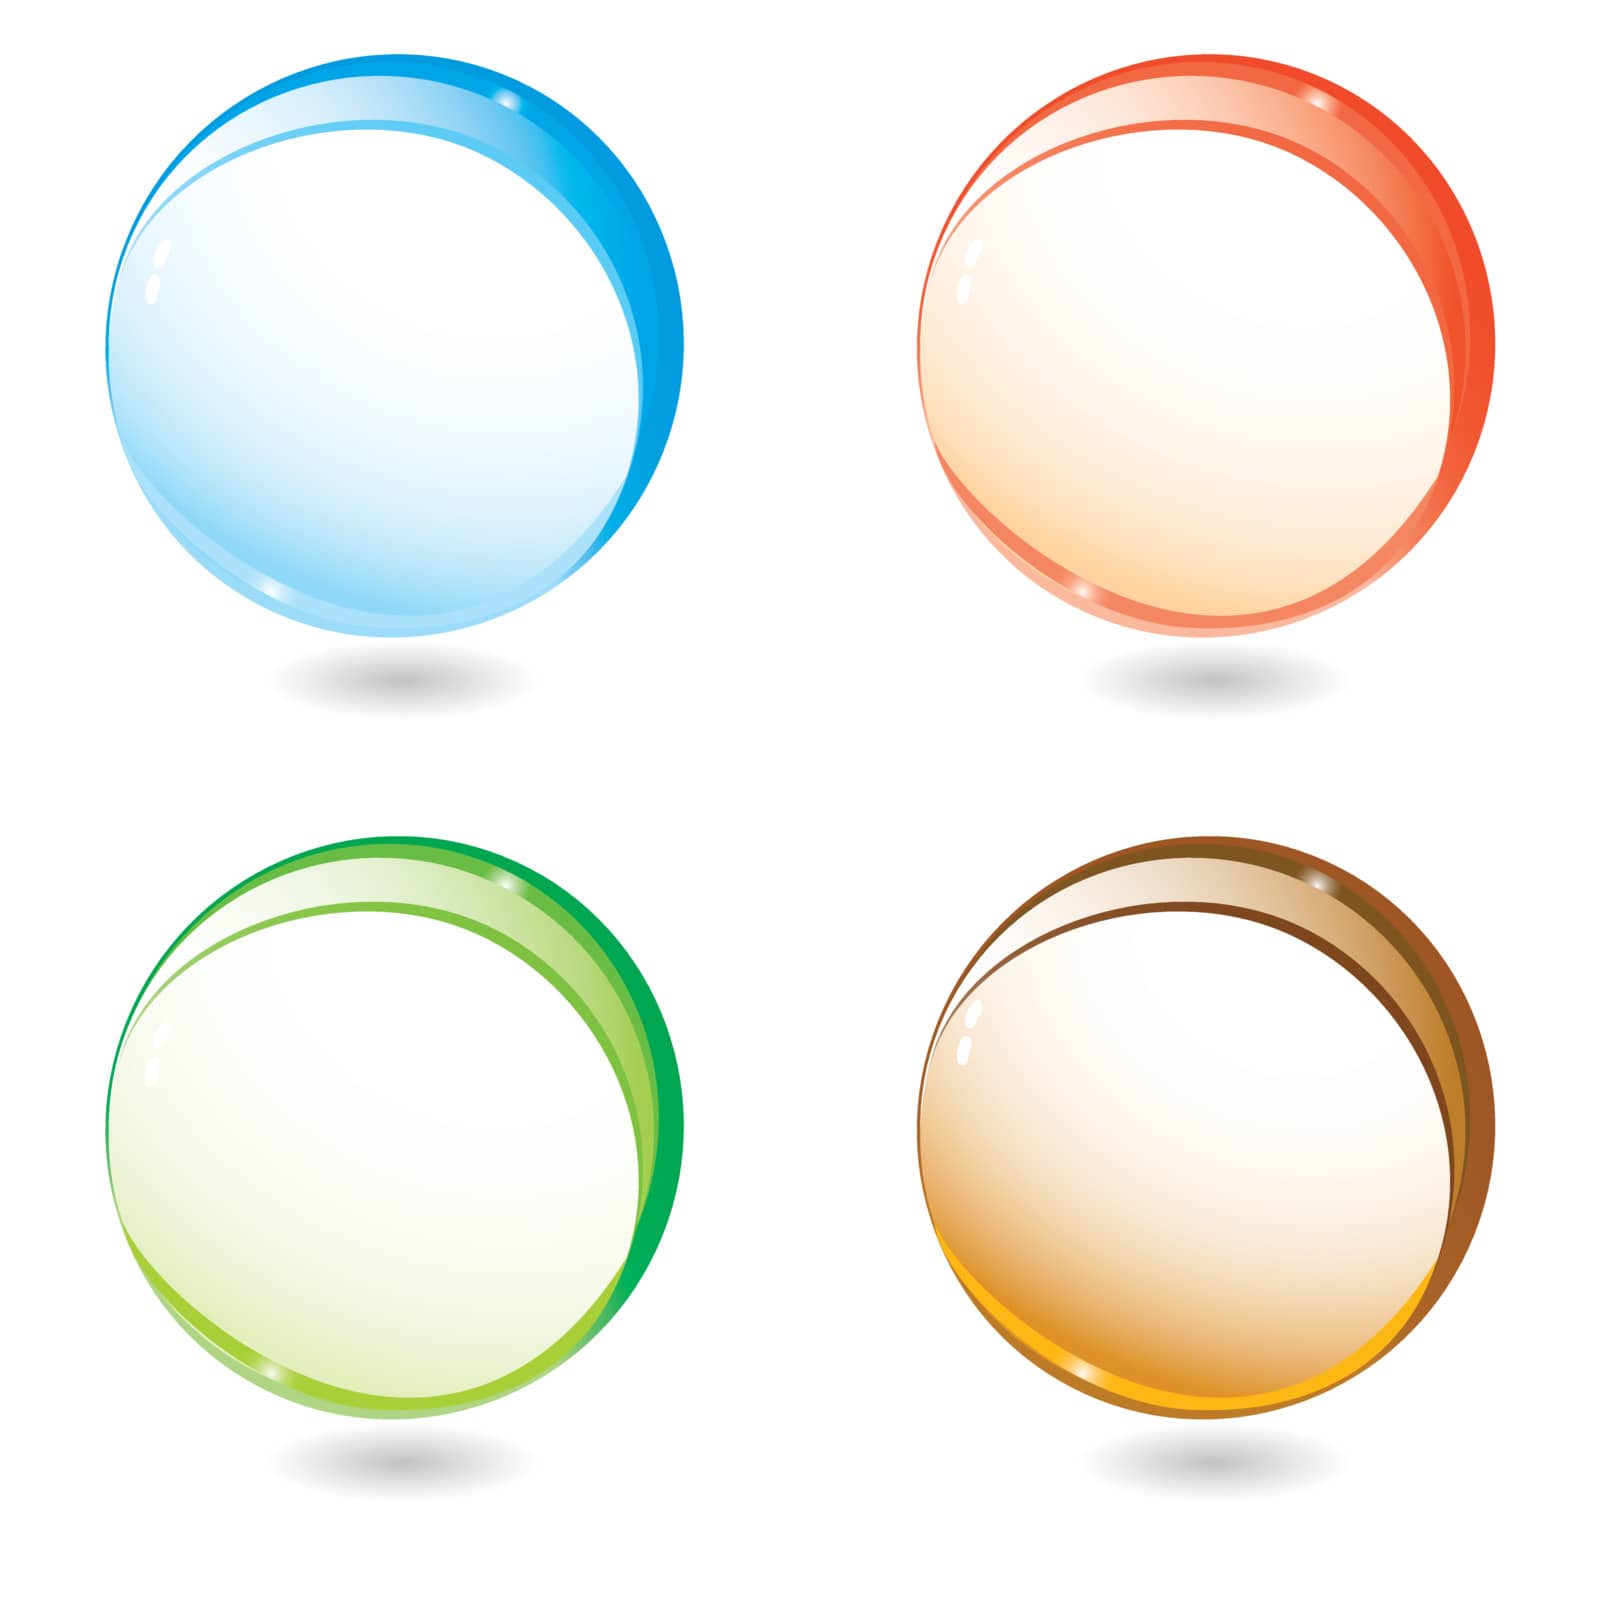 Four empty spheres vector illustration